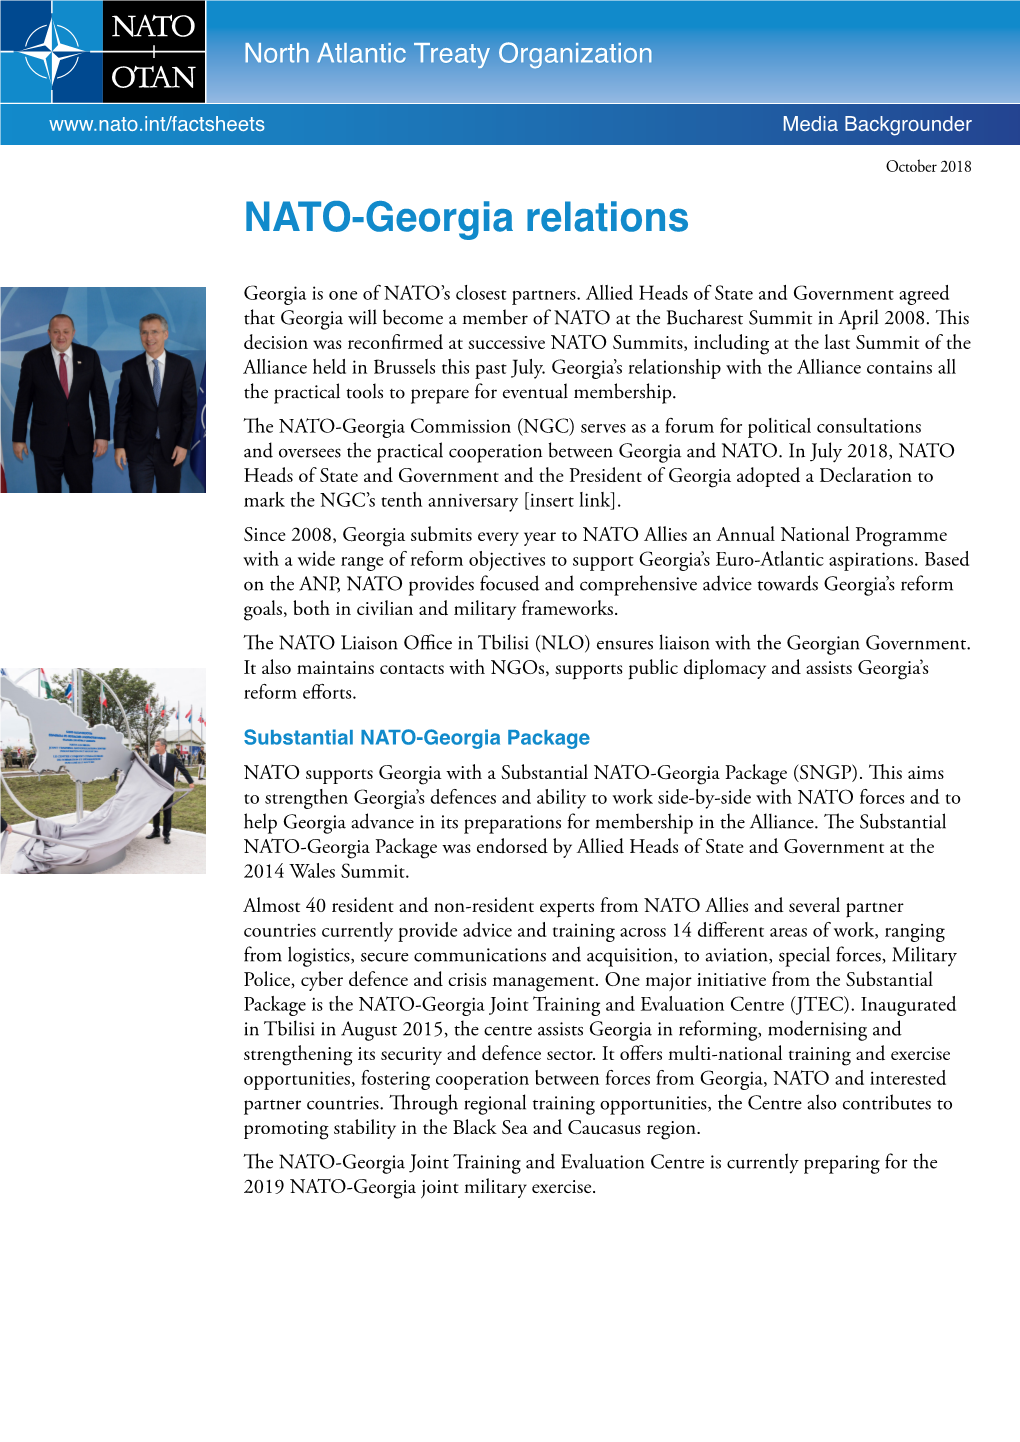 NATO-Georgia Relations